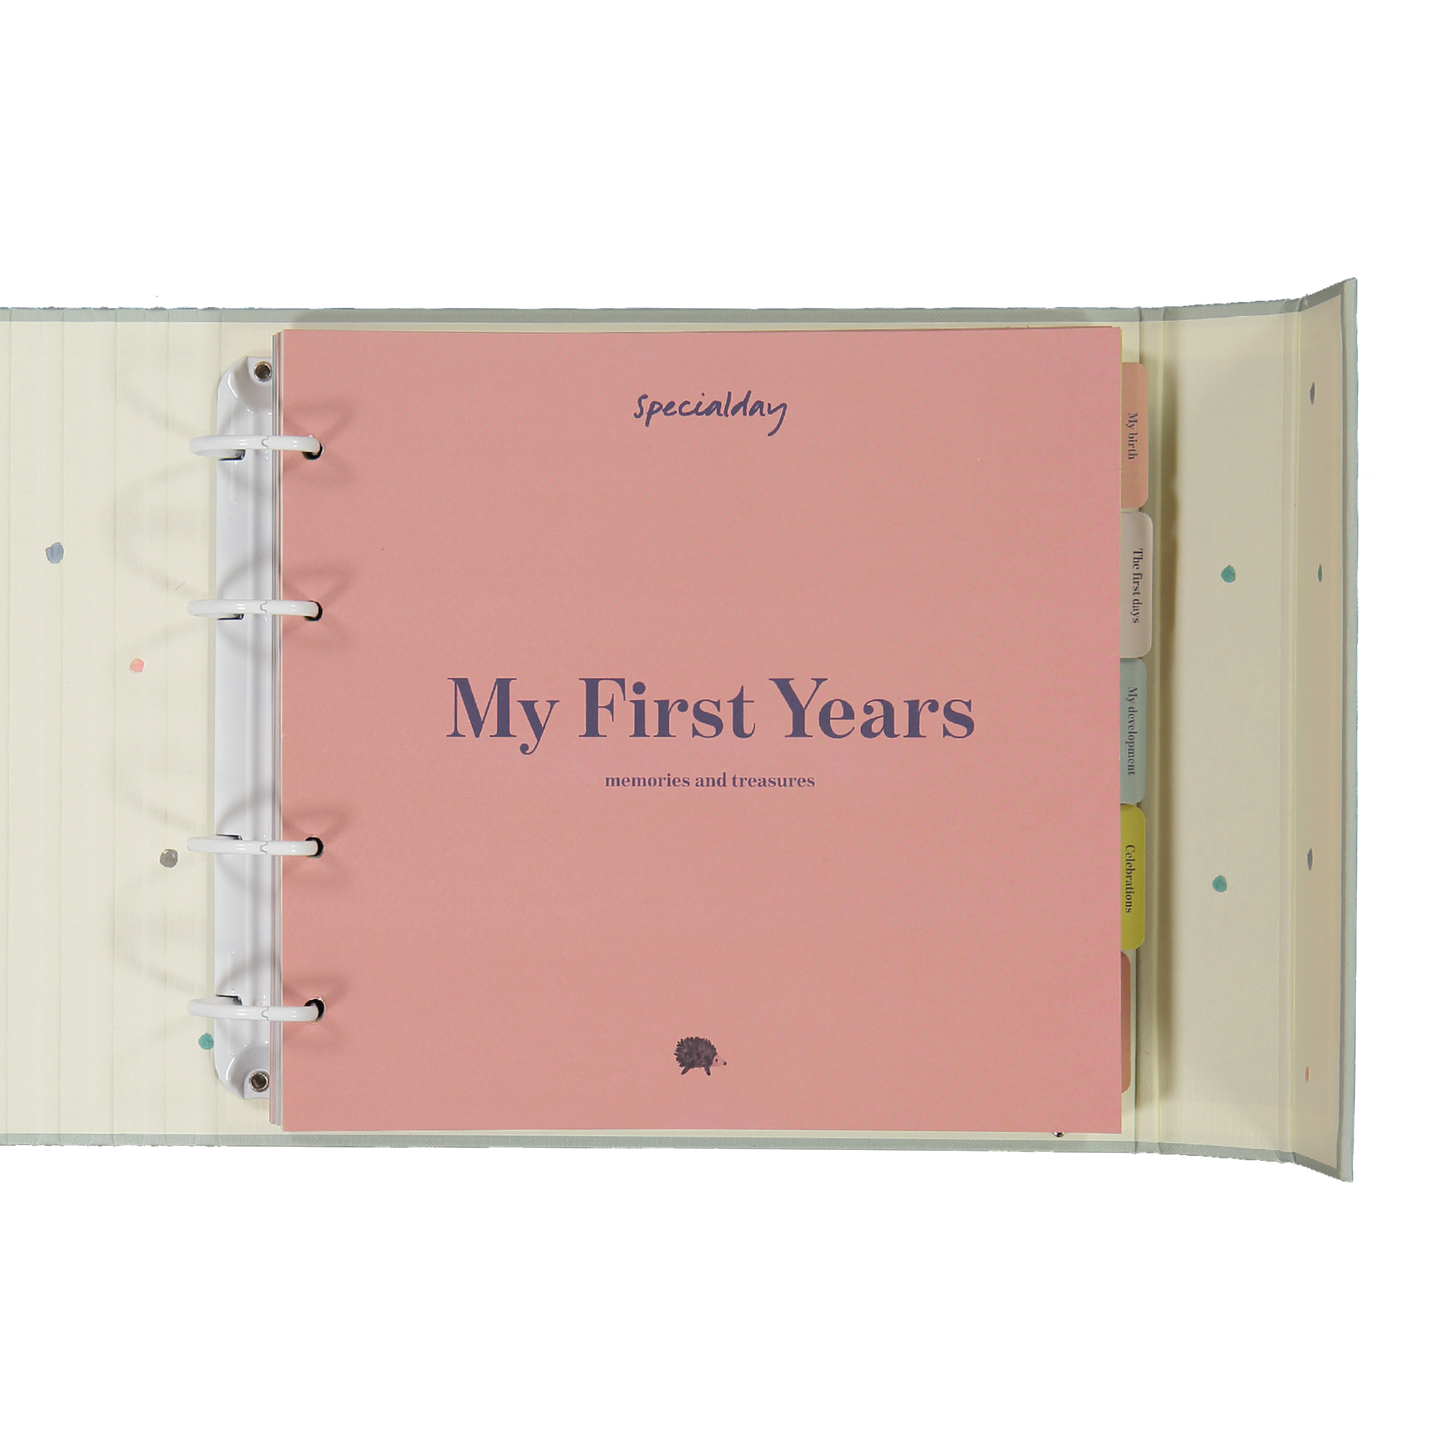 my first years - memories & treasures (rose album)